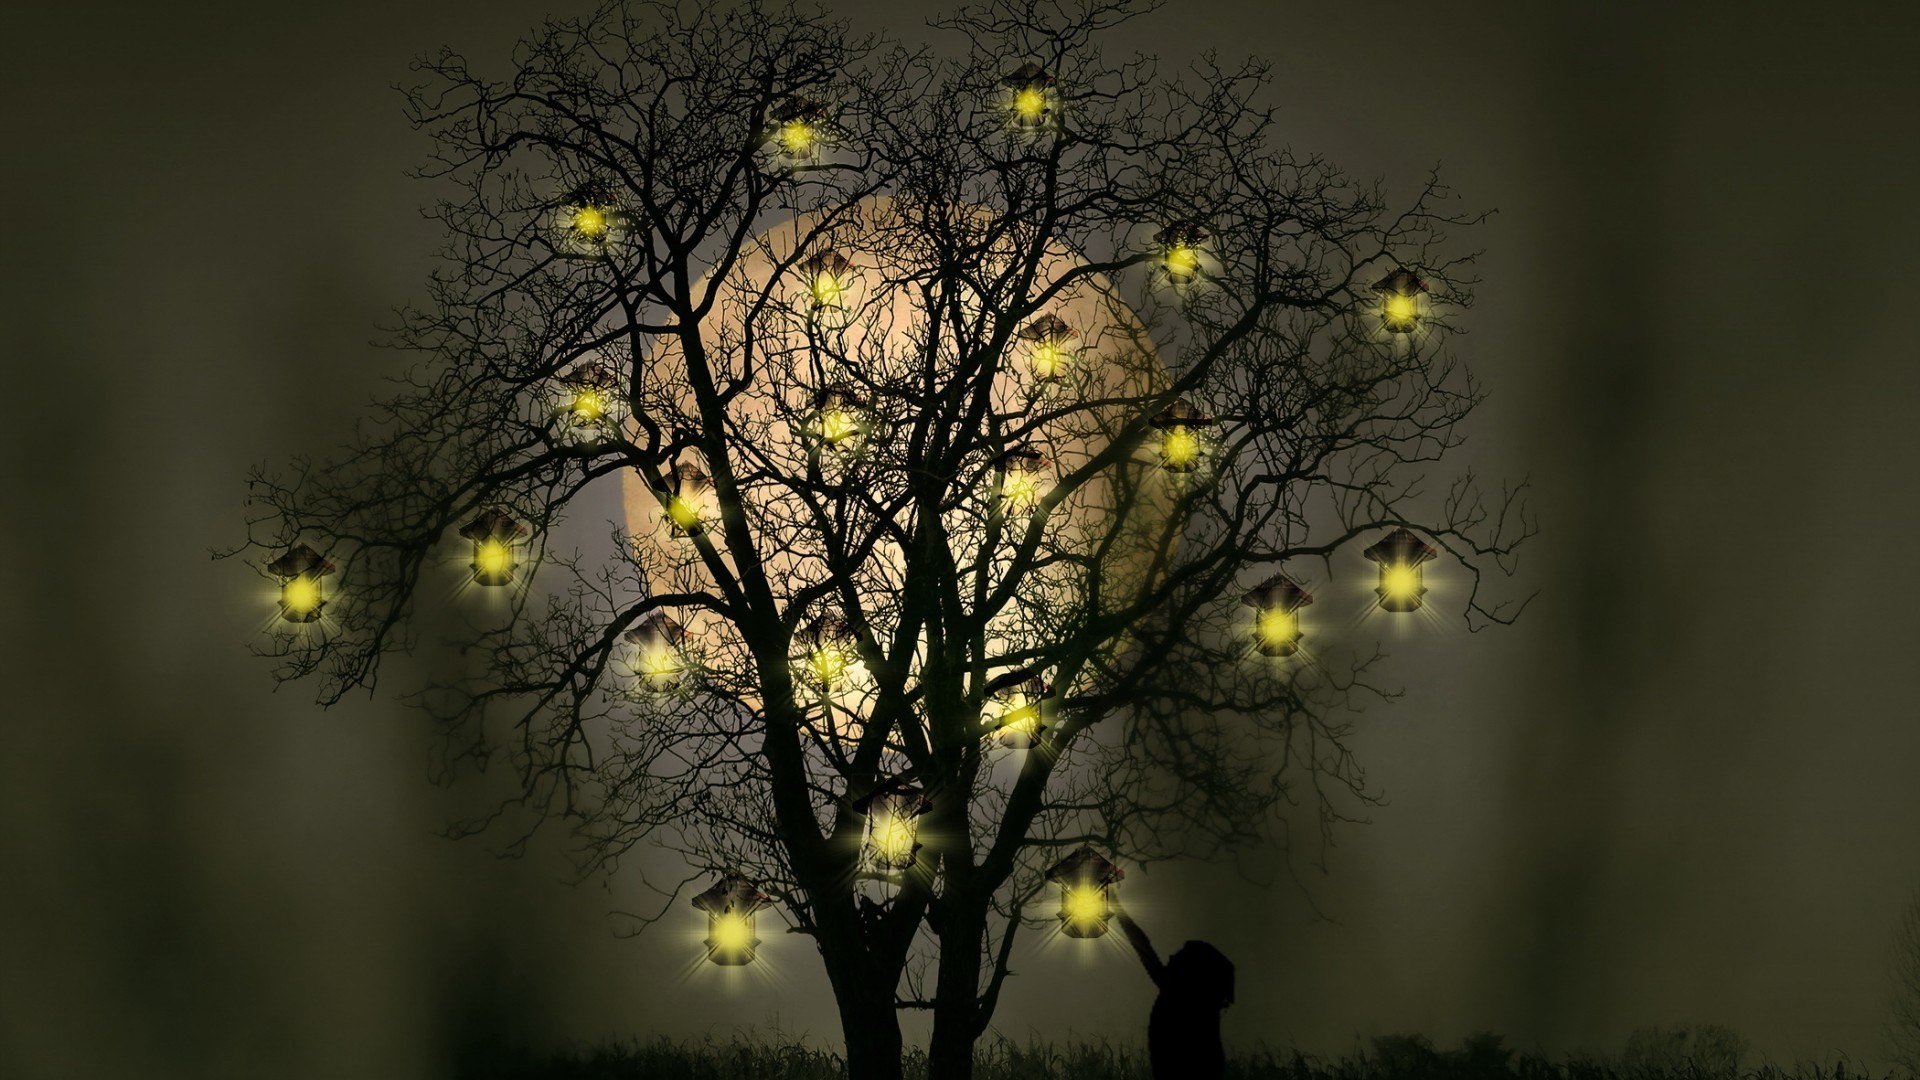 General 1920x1080 fantasy art nature trees night Moon lantern lights grass children silhouette Photoshopped branch